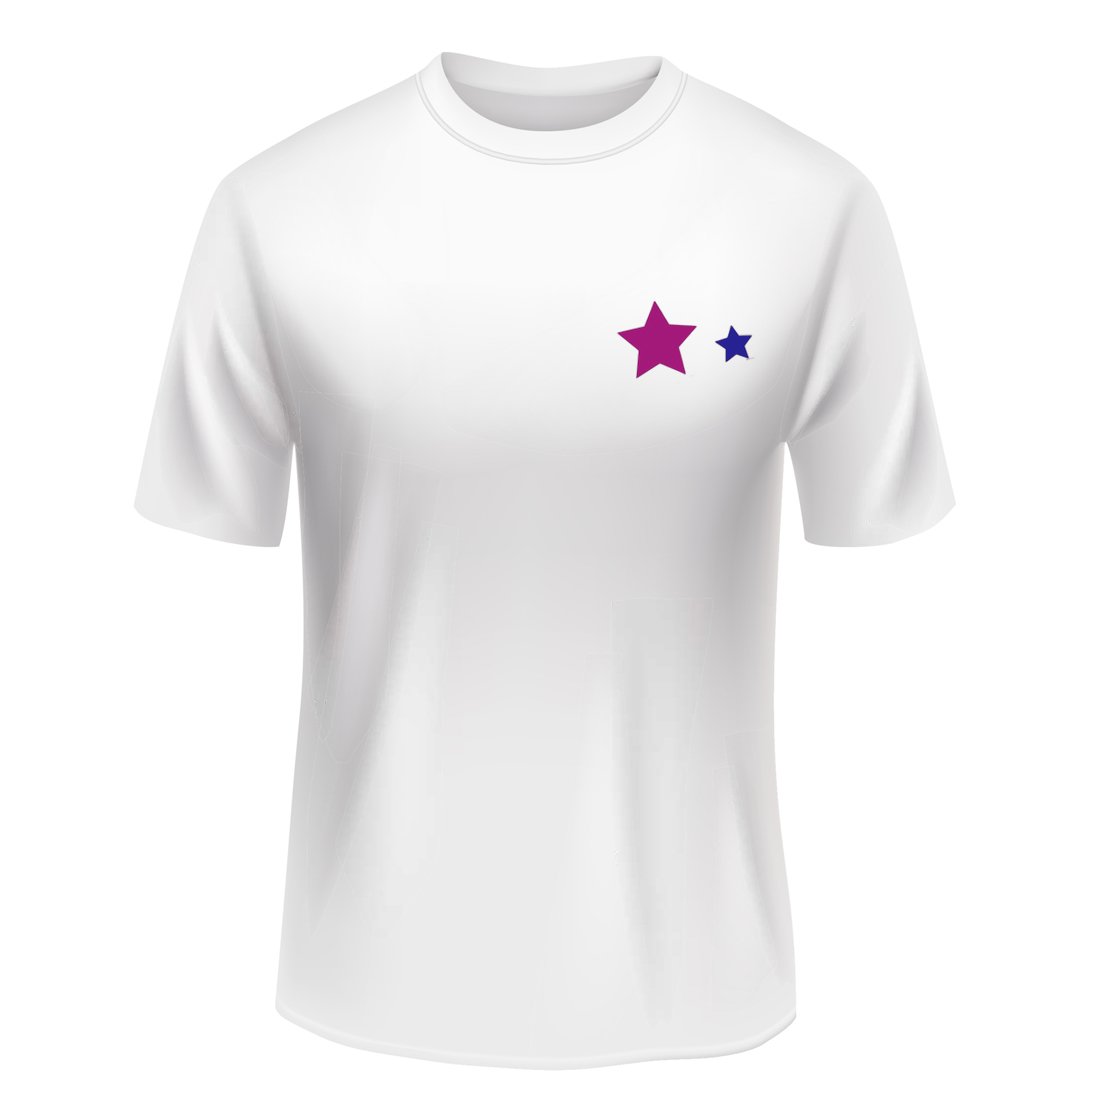 ti shirt design for printing stars front2 88